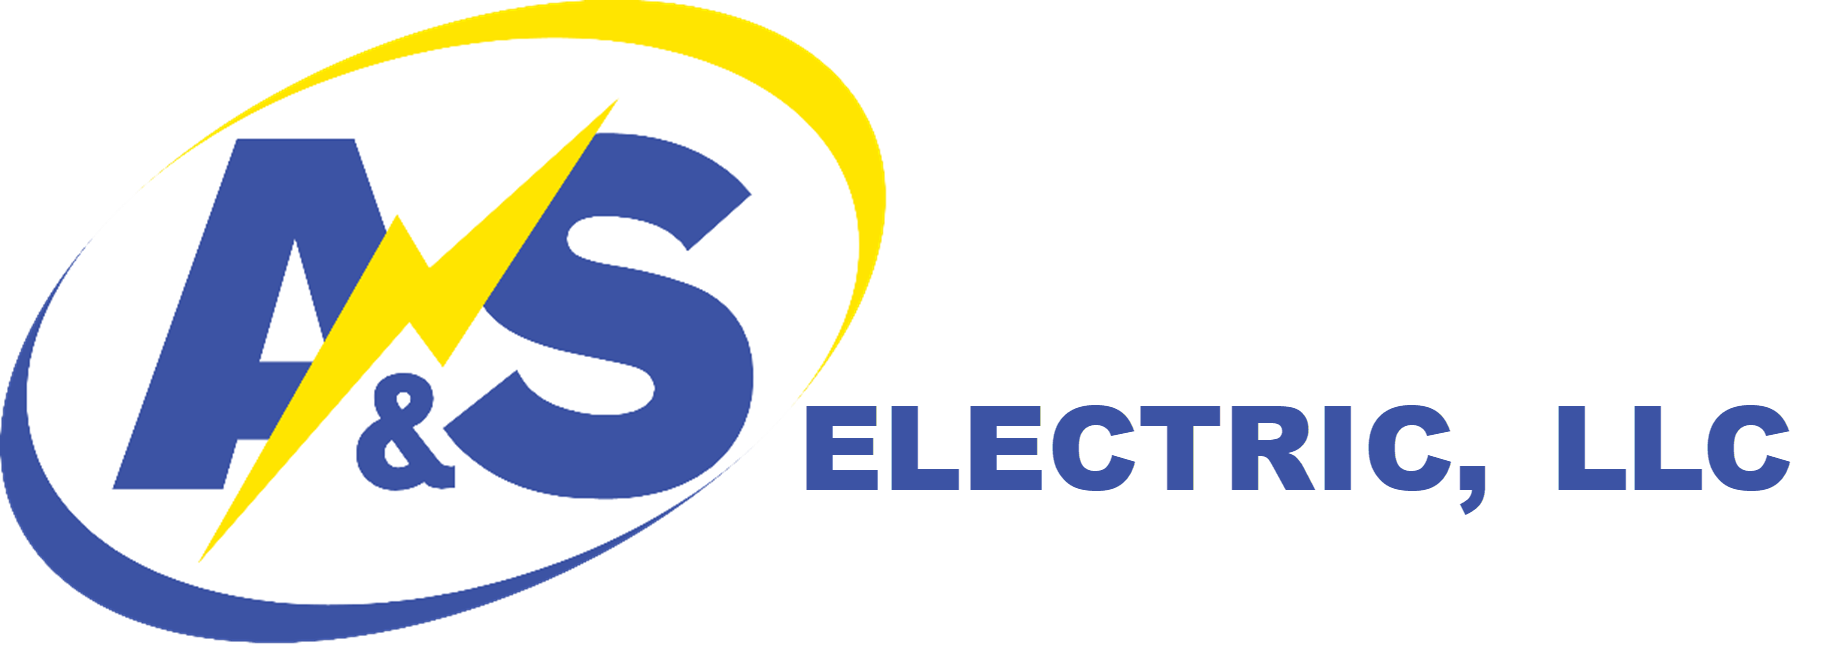 A&S Electric, LLC Logo